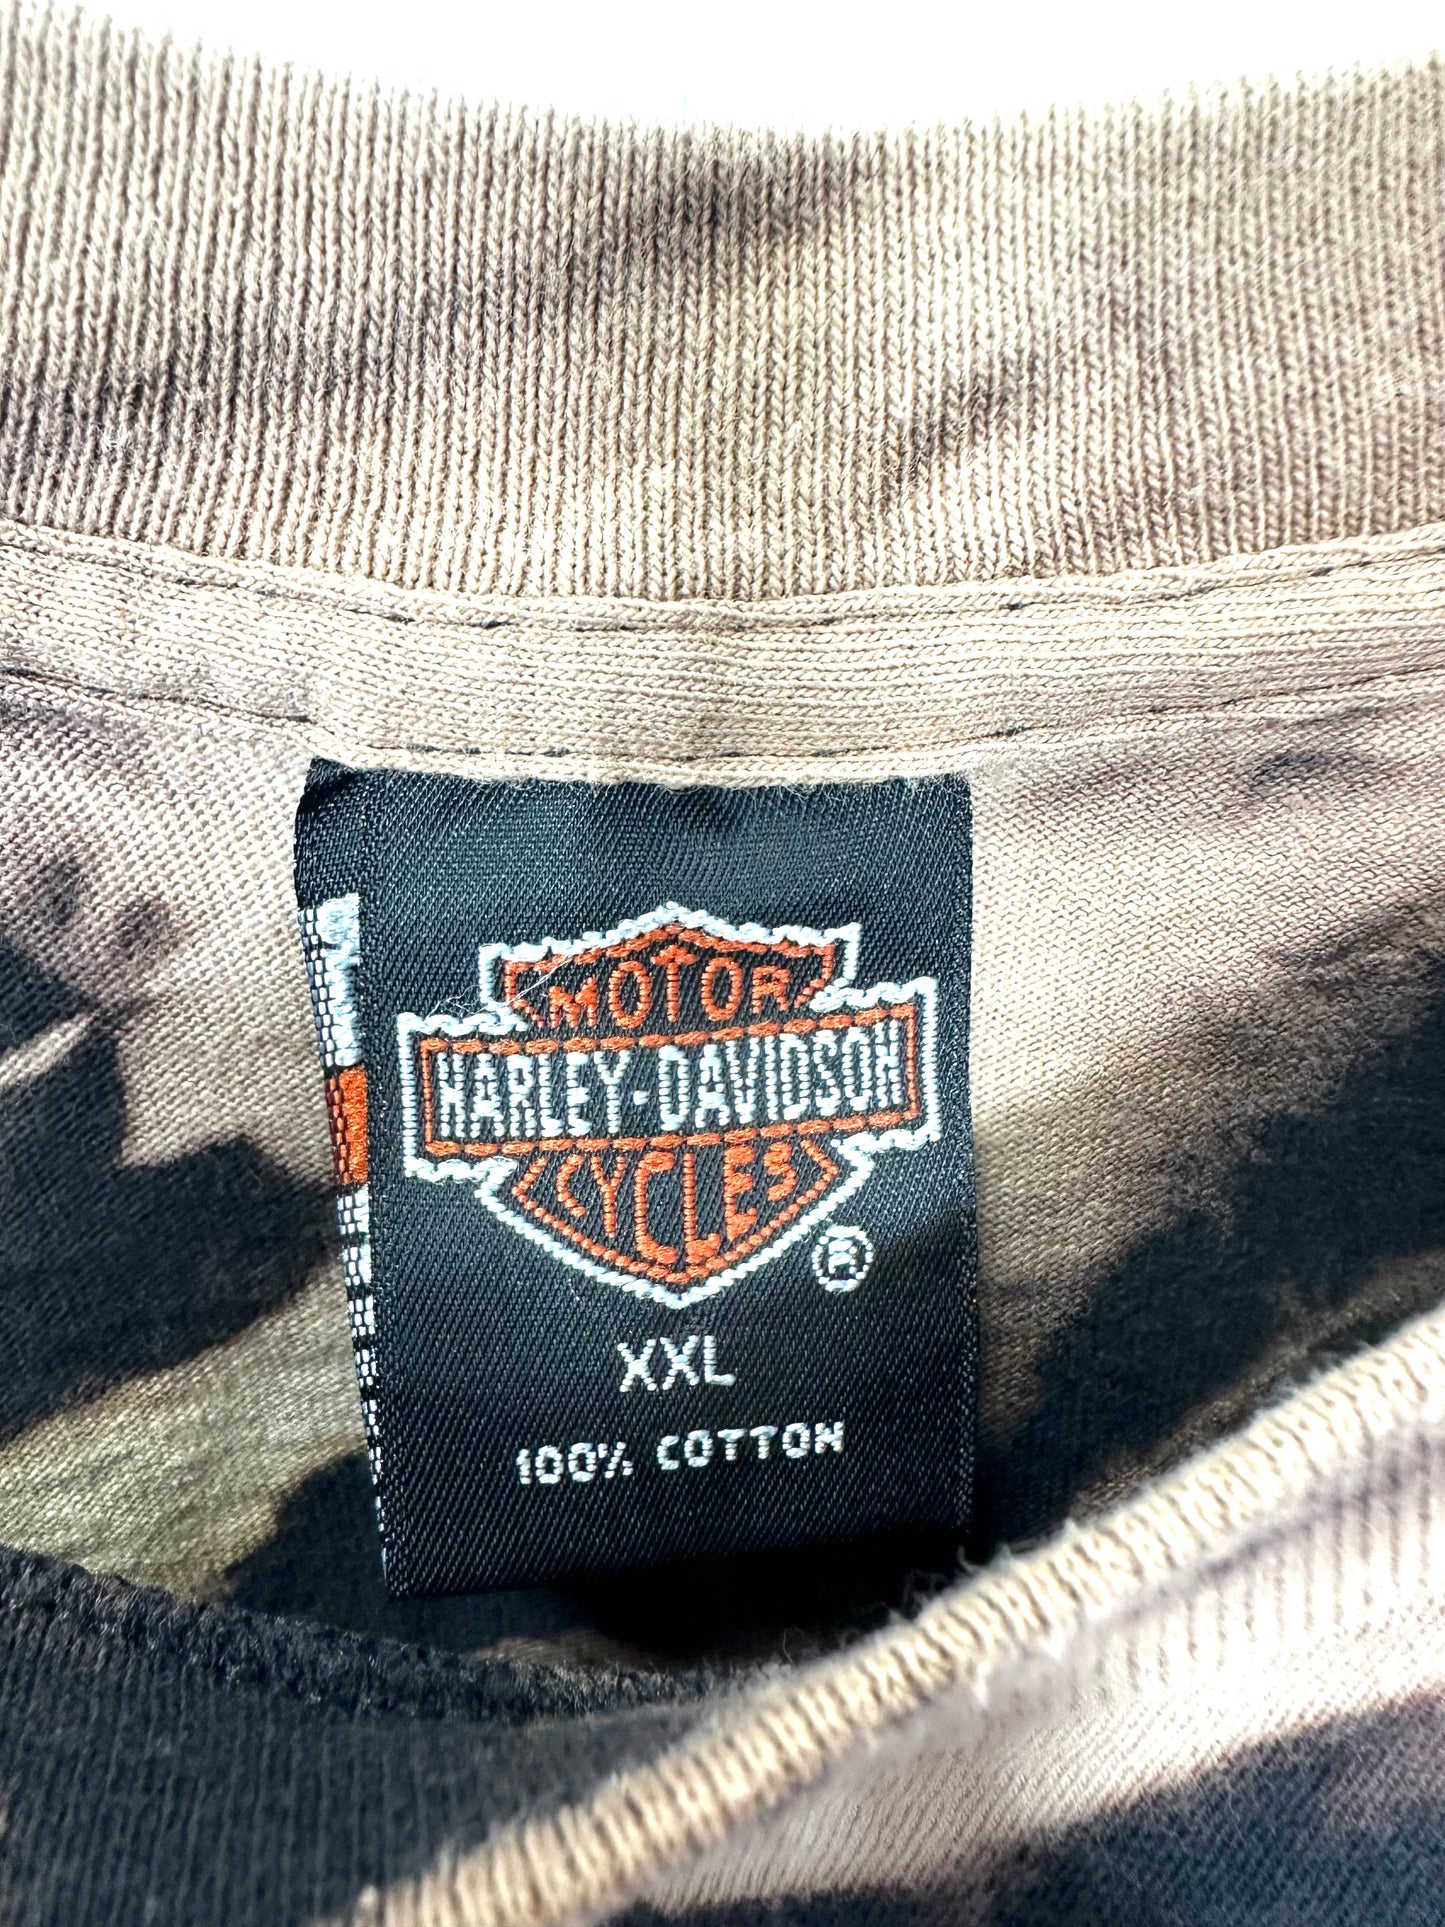 1995 Harley Davidson T Shirt - XXL